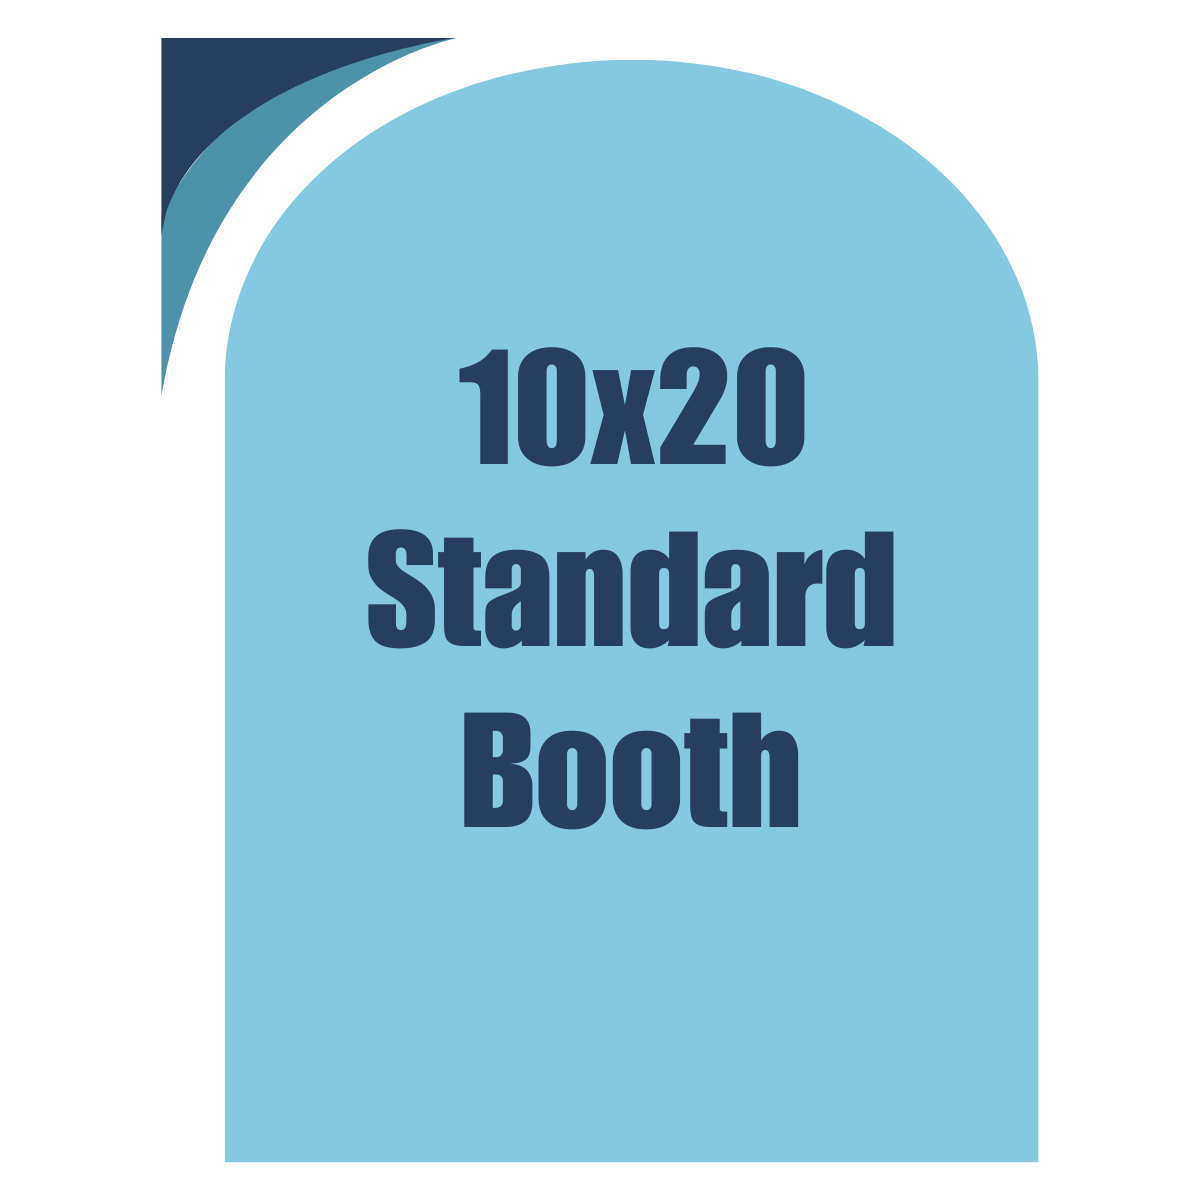 10x20 Standard Booth